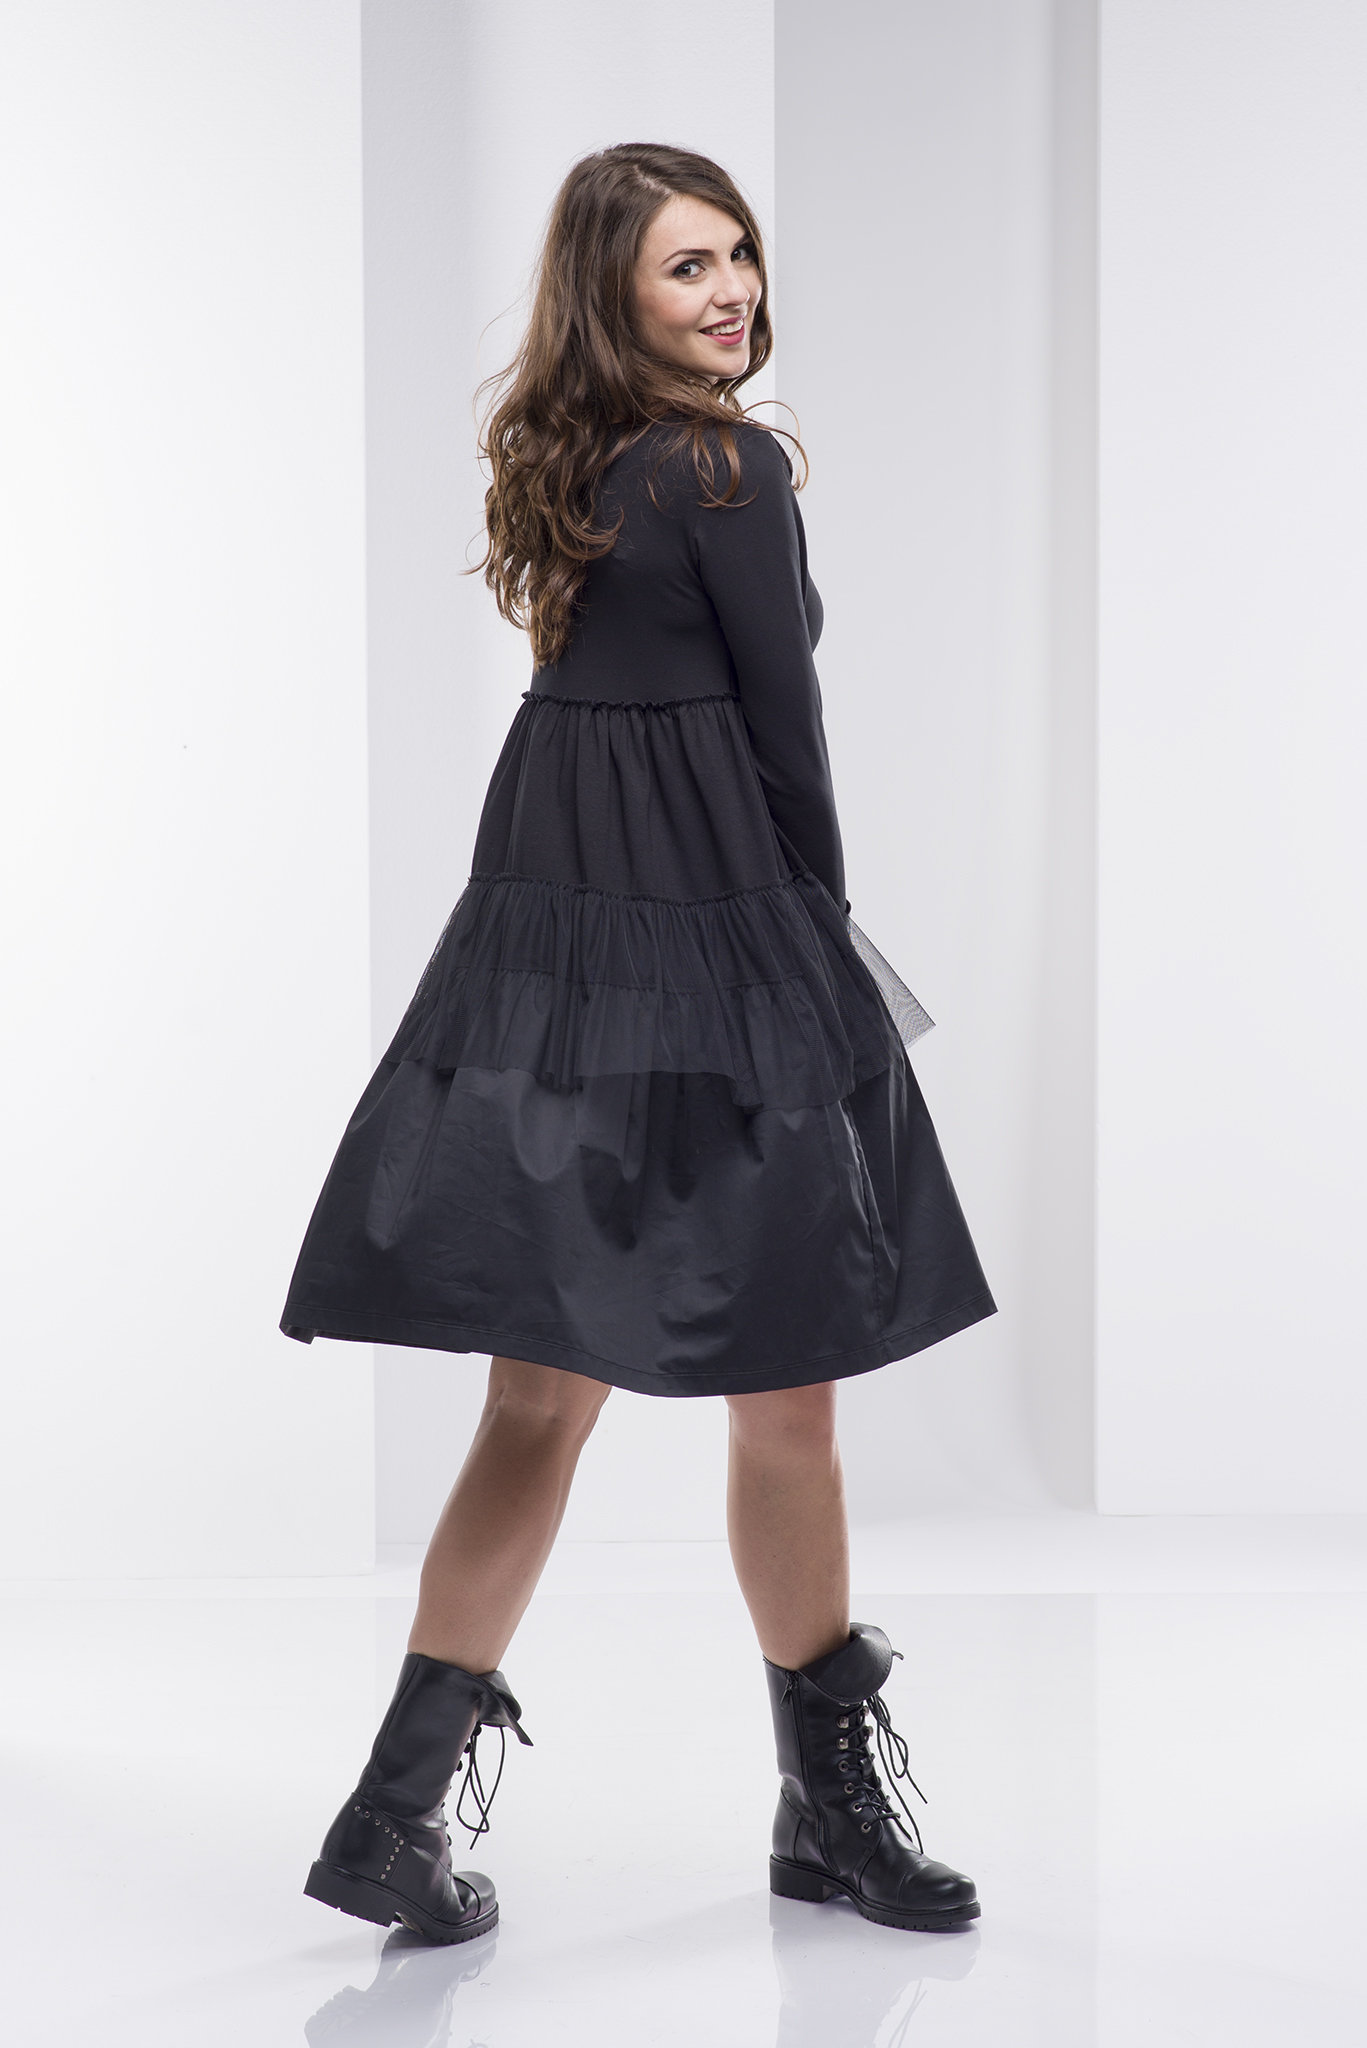 Black Dress Avant Garde Clothing Lolita Dress Gothic Dress image photo